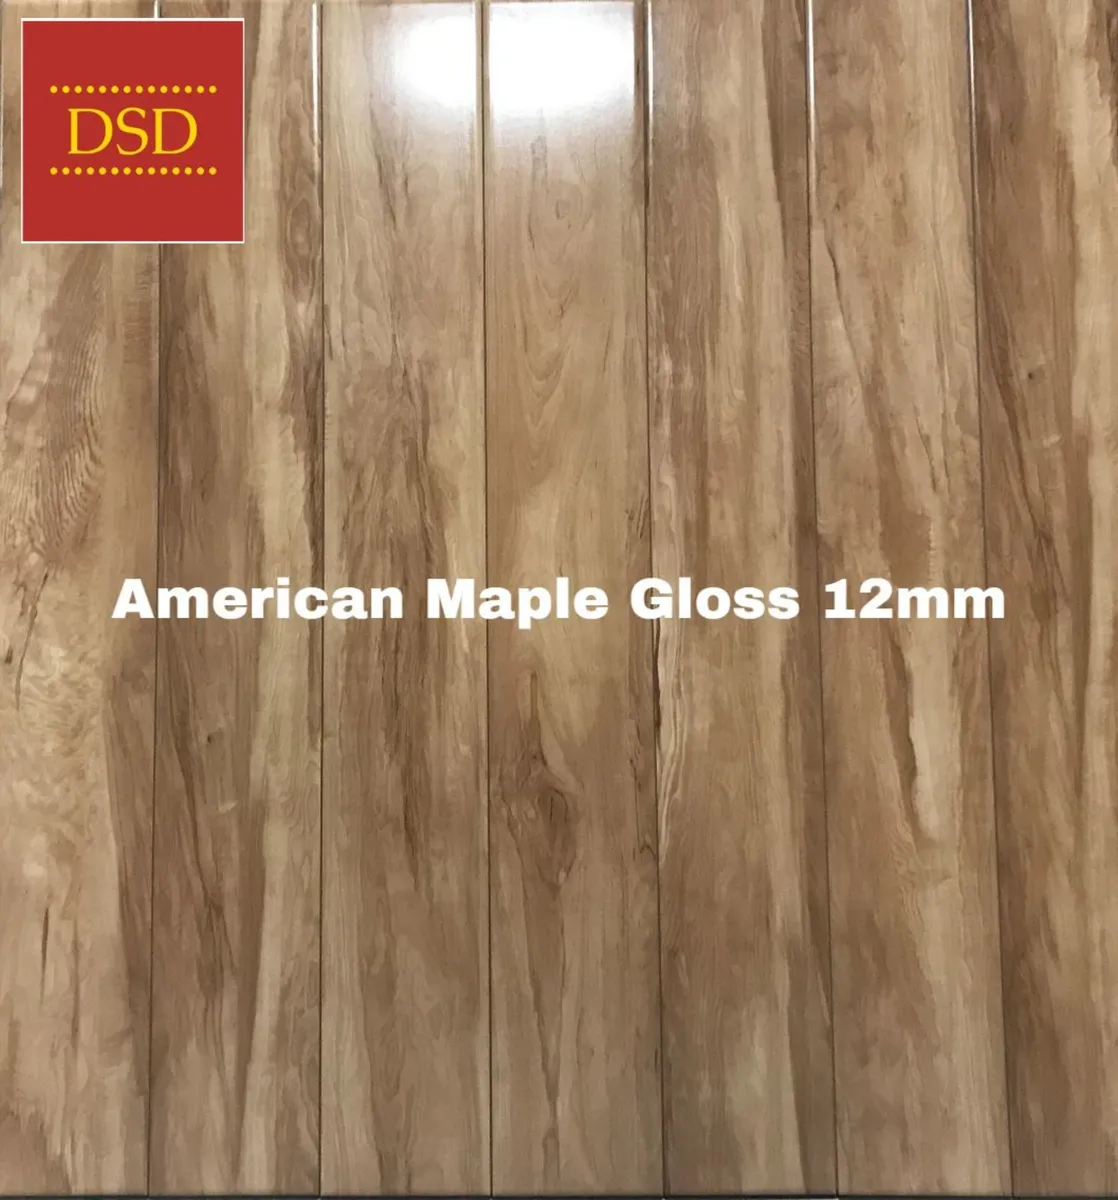 American Maple 12mm Flooring - Free Nationwide Del - Image 1